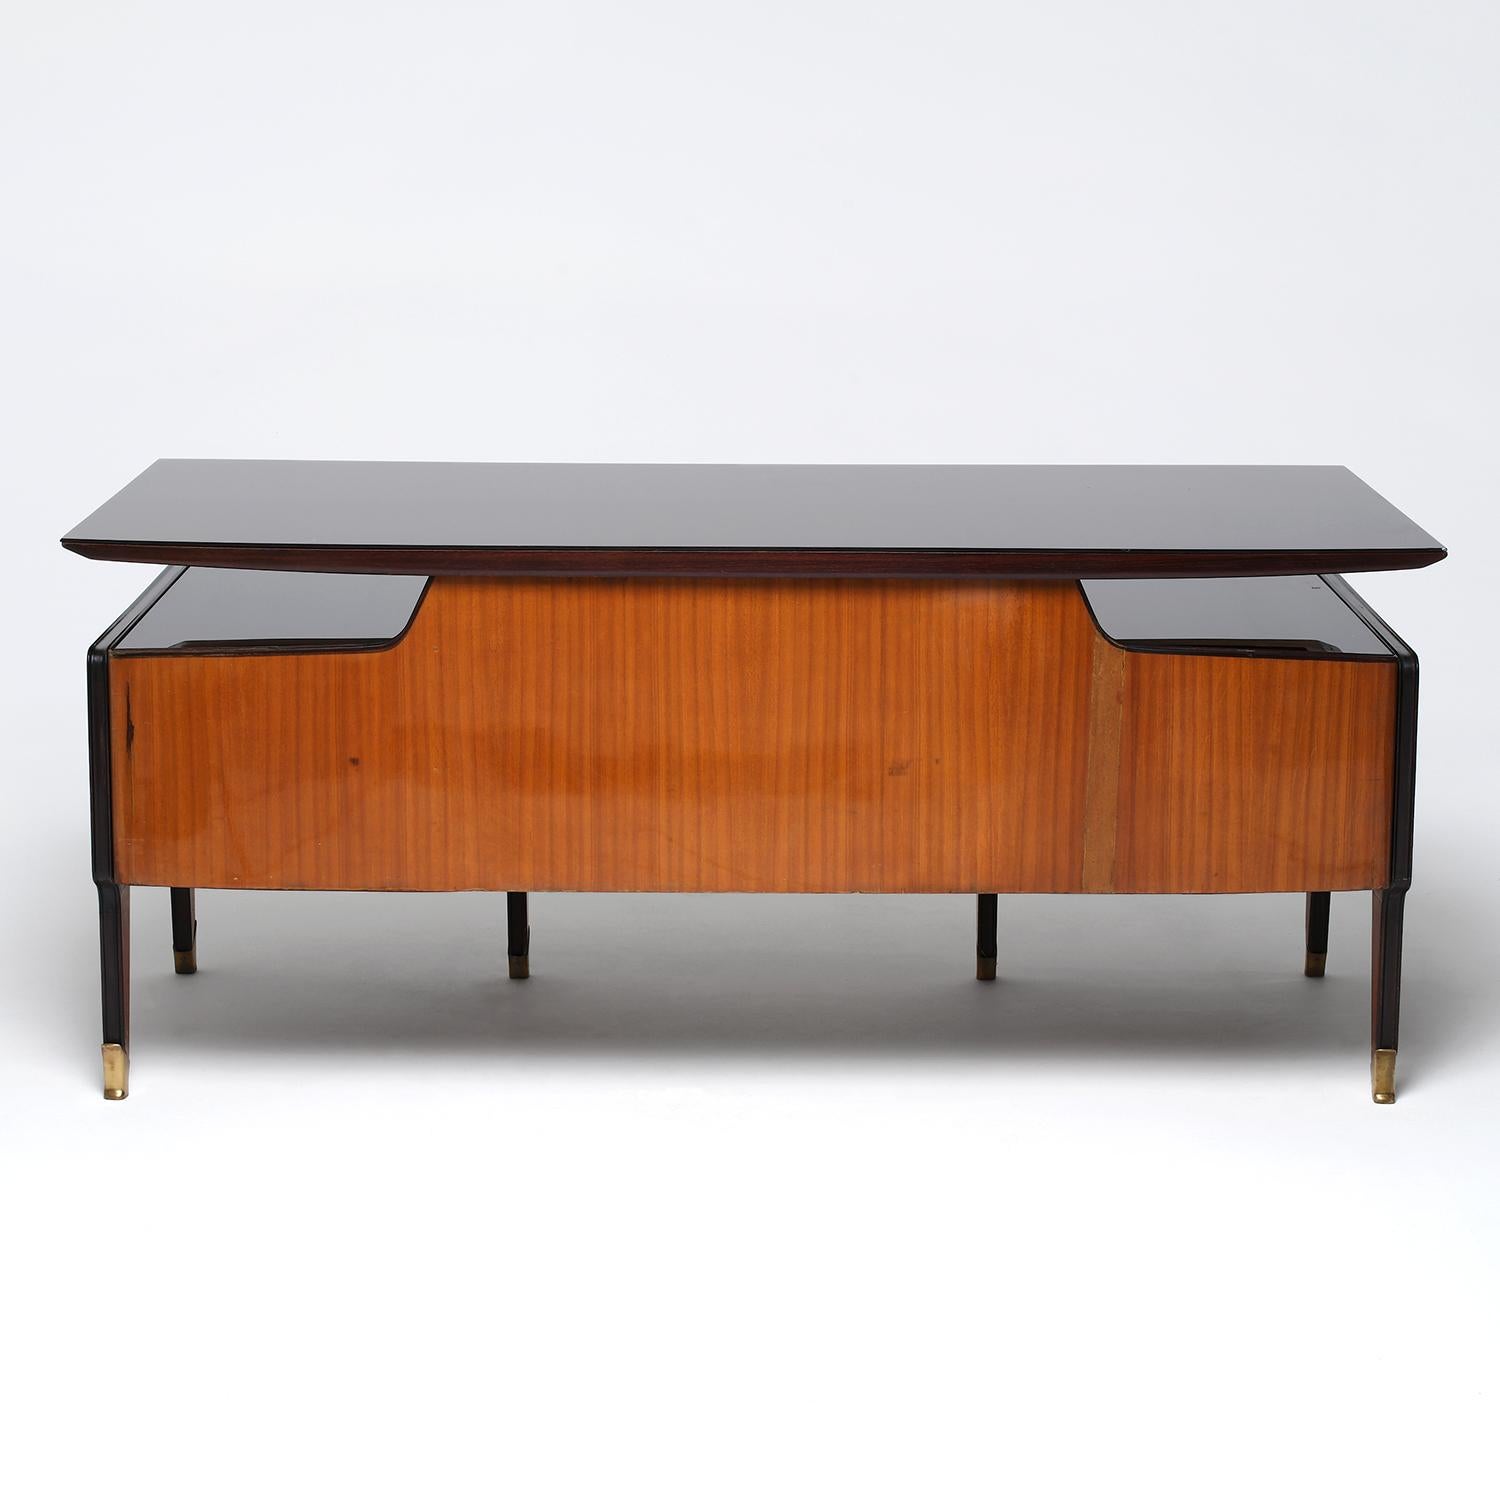 20th Century Italian Mahogany Writing Table - Vintage Desk by Vittorio Dassi For Sale 6